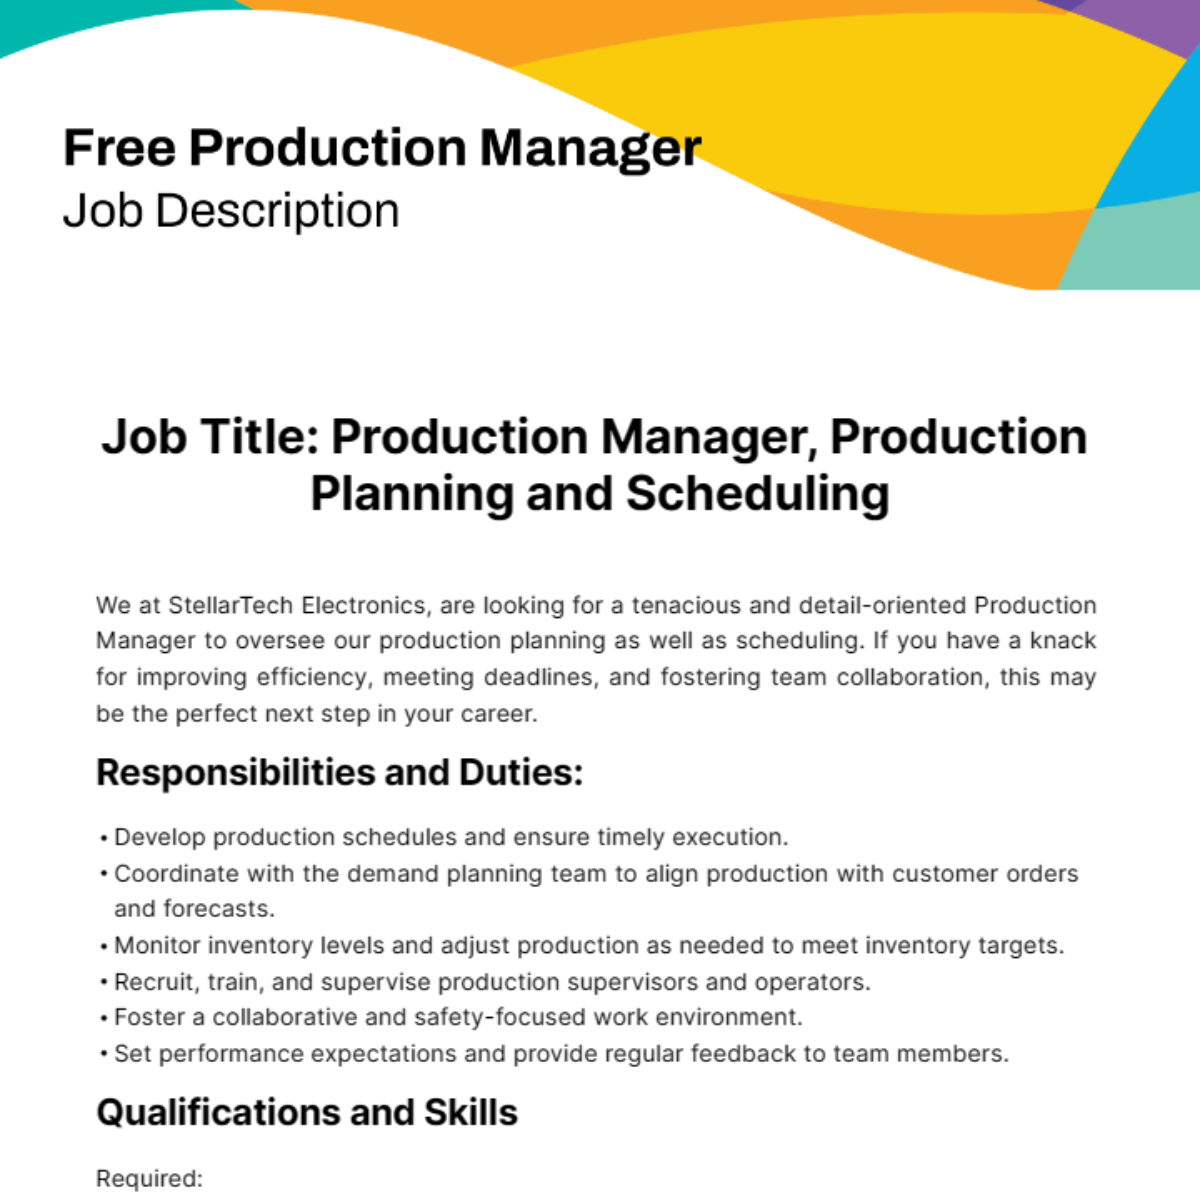 Free Production Manager Job Description Template